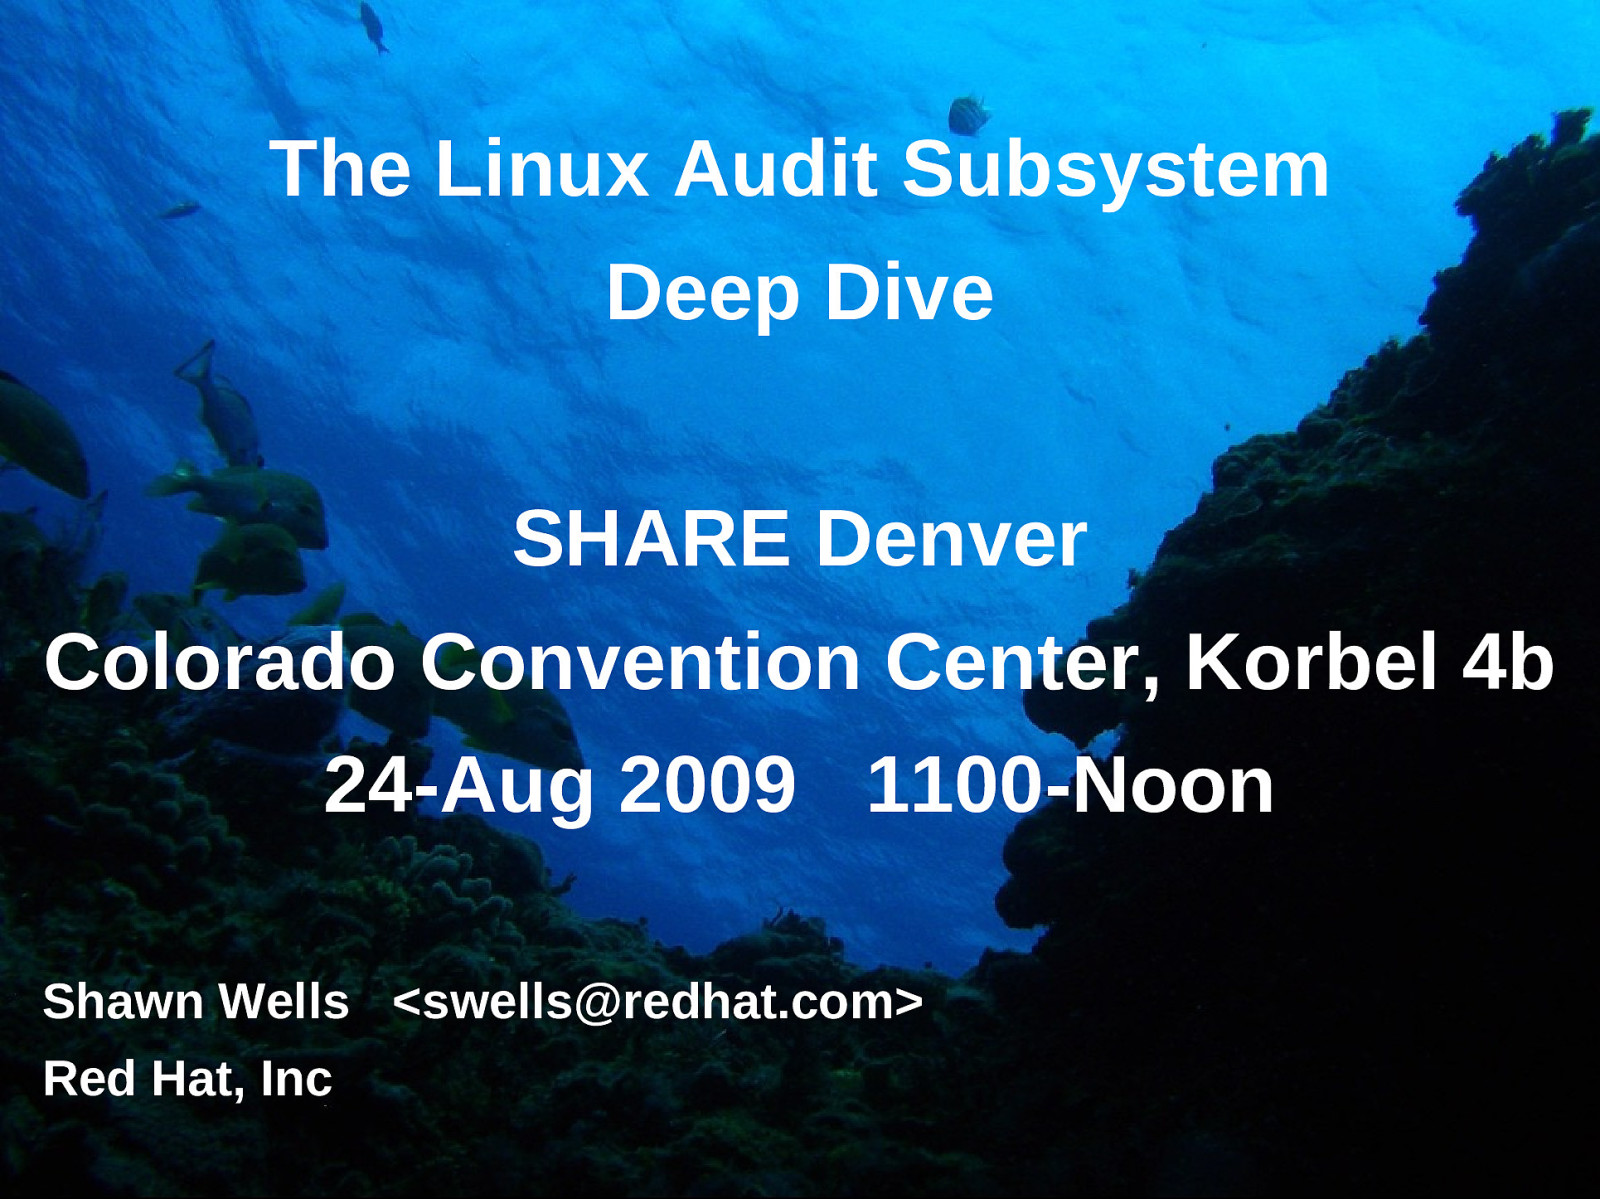 The Linux Audit Subsystem: Deep Dive